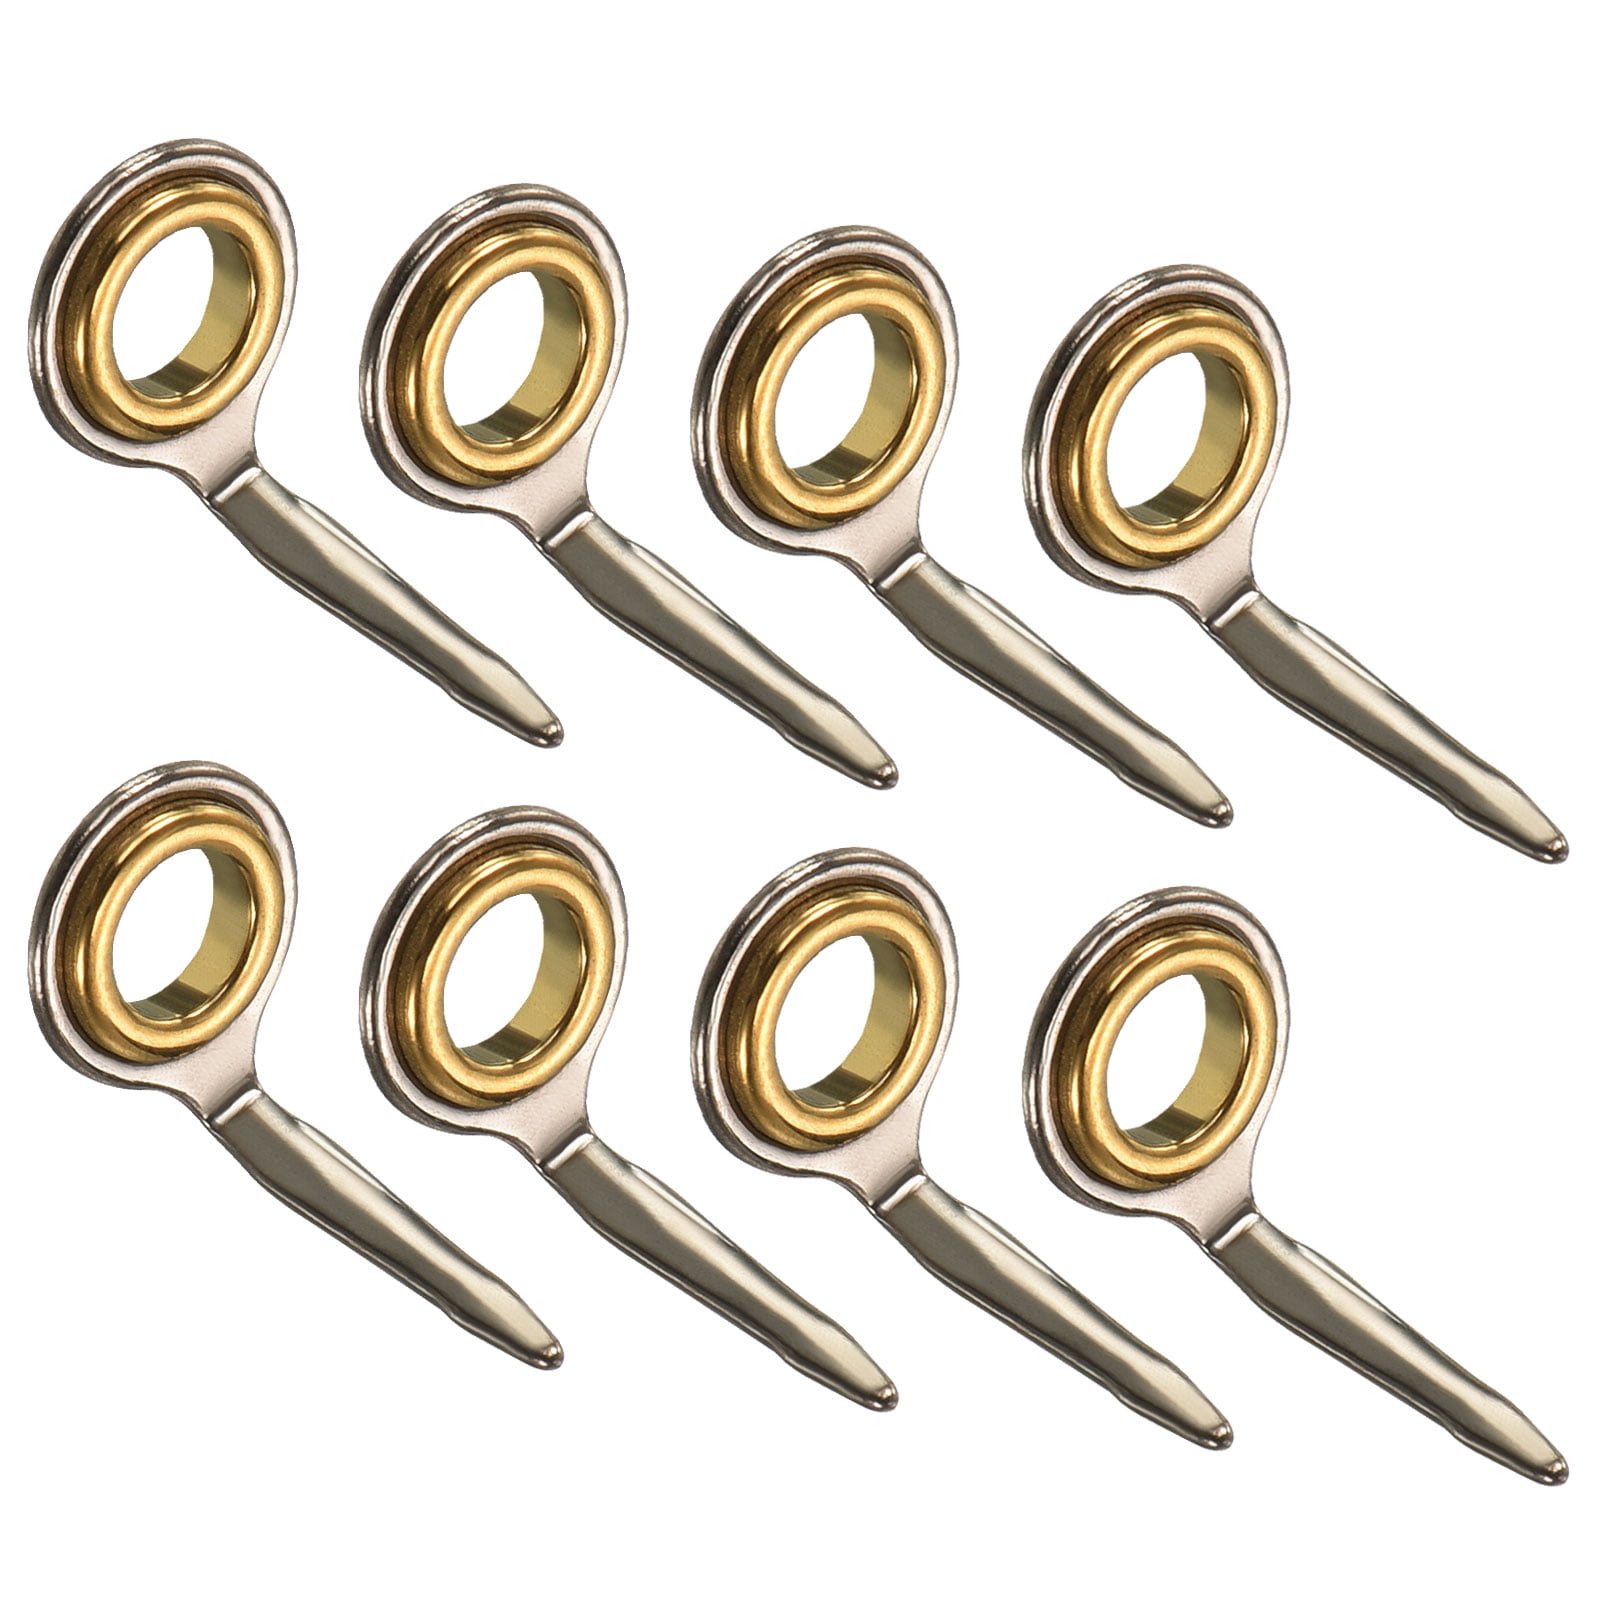 4.6mm Iron Fishing Rod Guide Repair Kit Eyelet Replacement, Golden 8 Pack